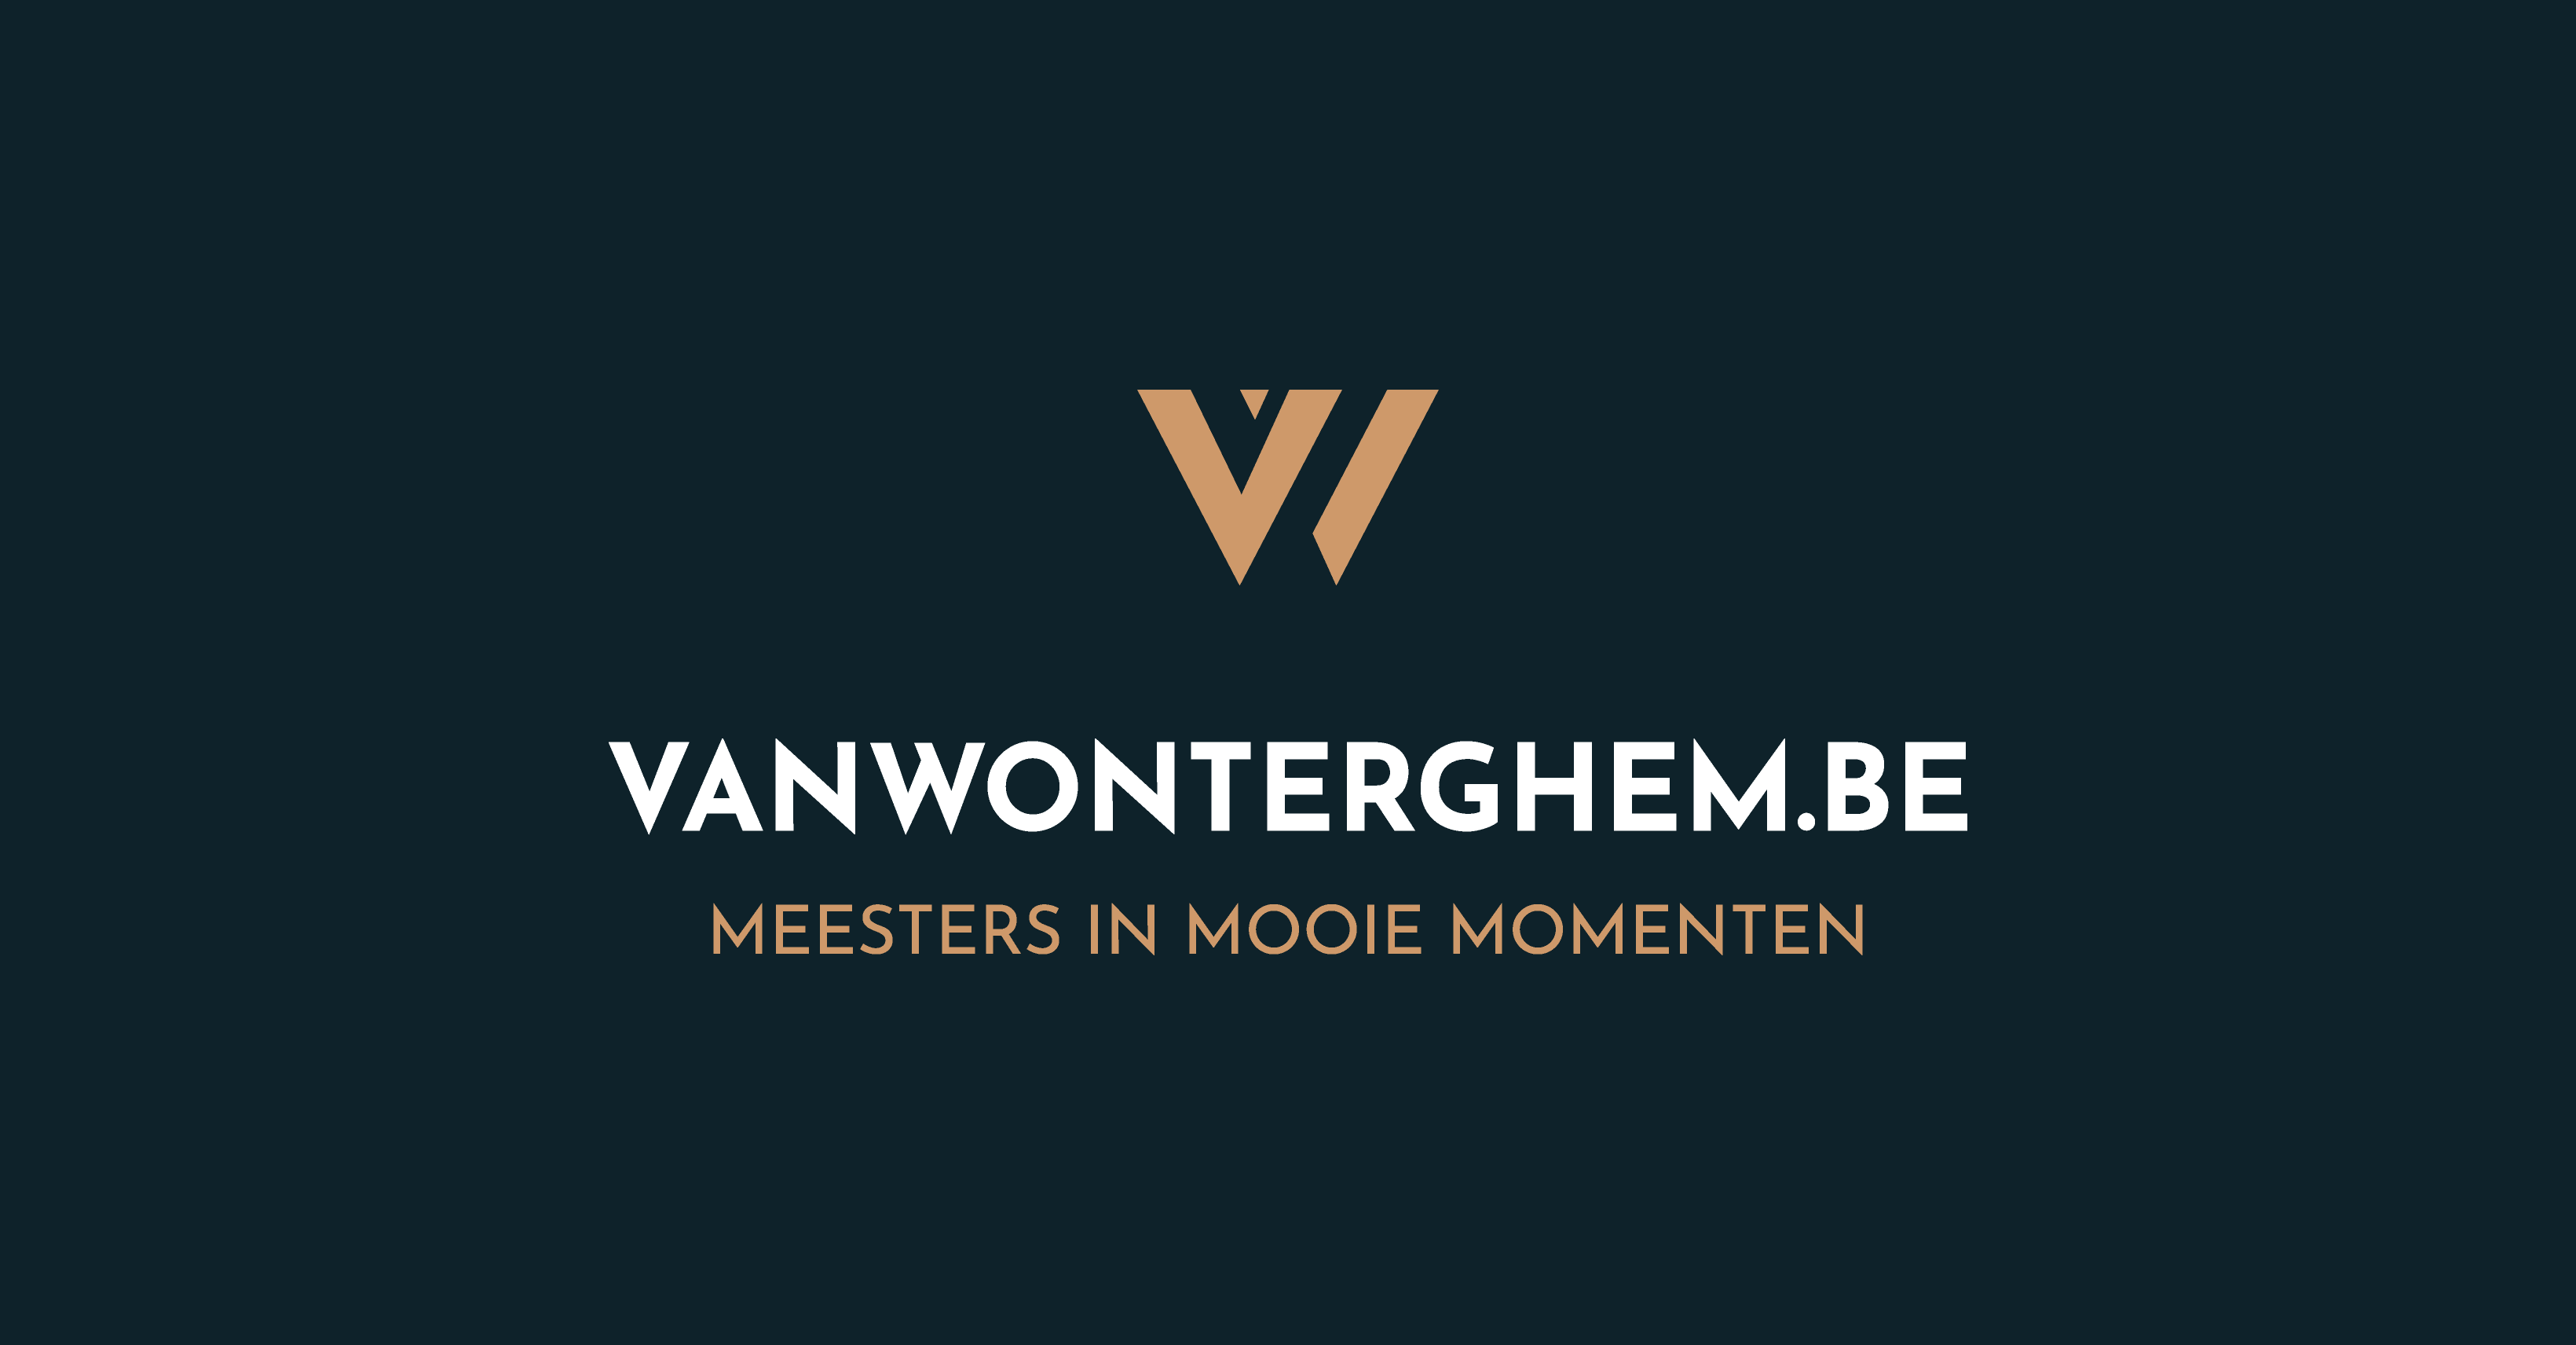 Van Wonterghem